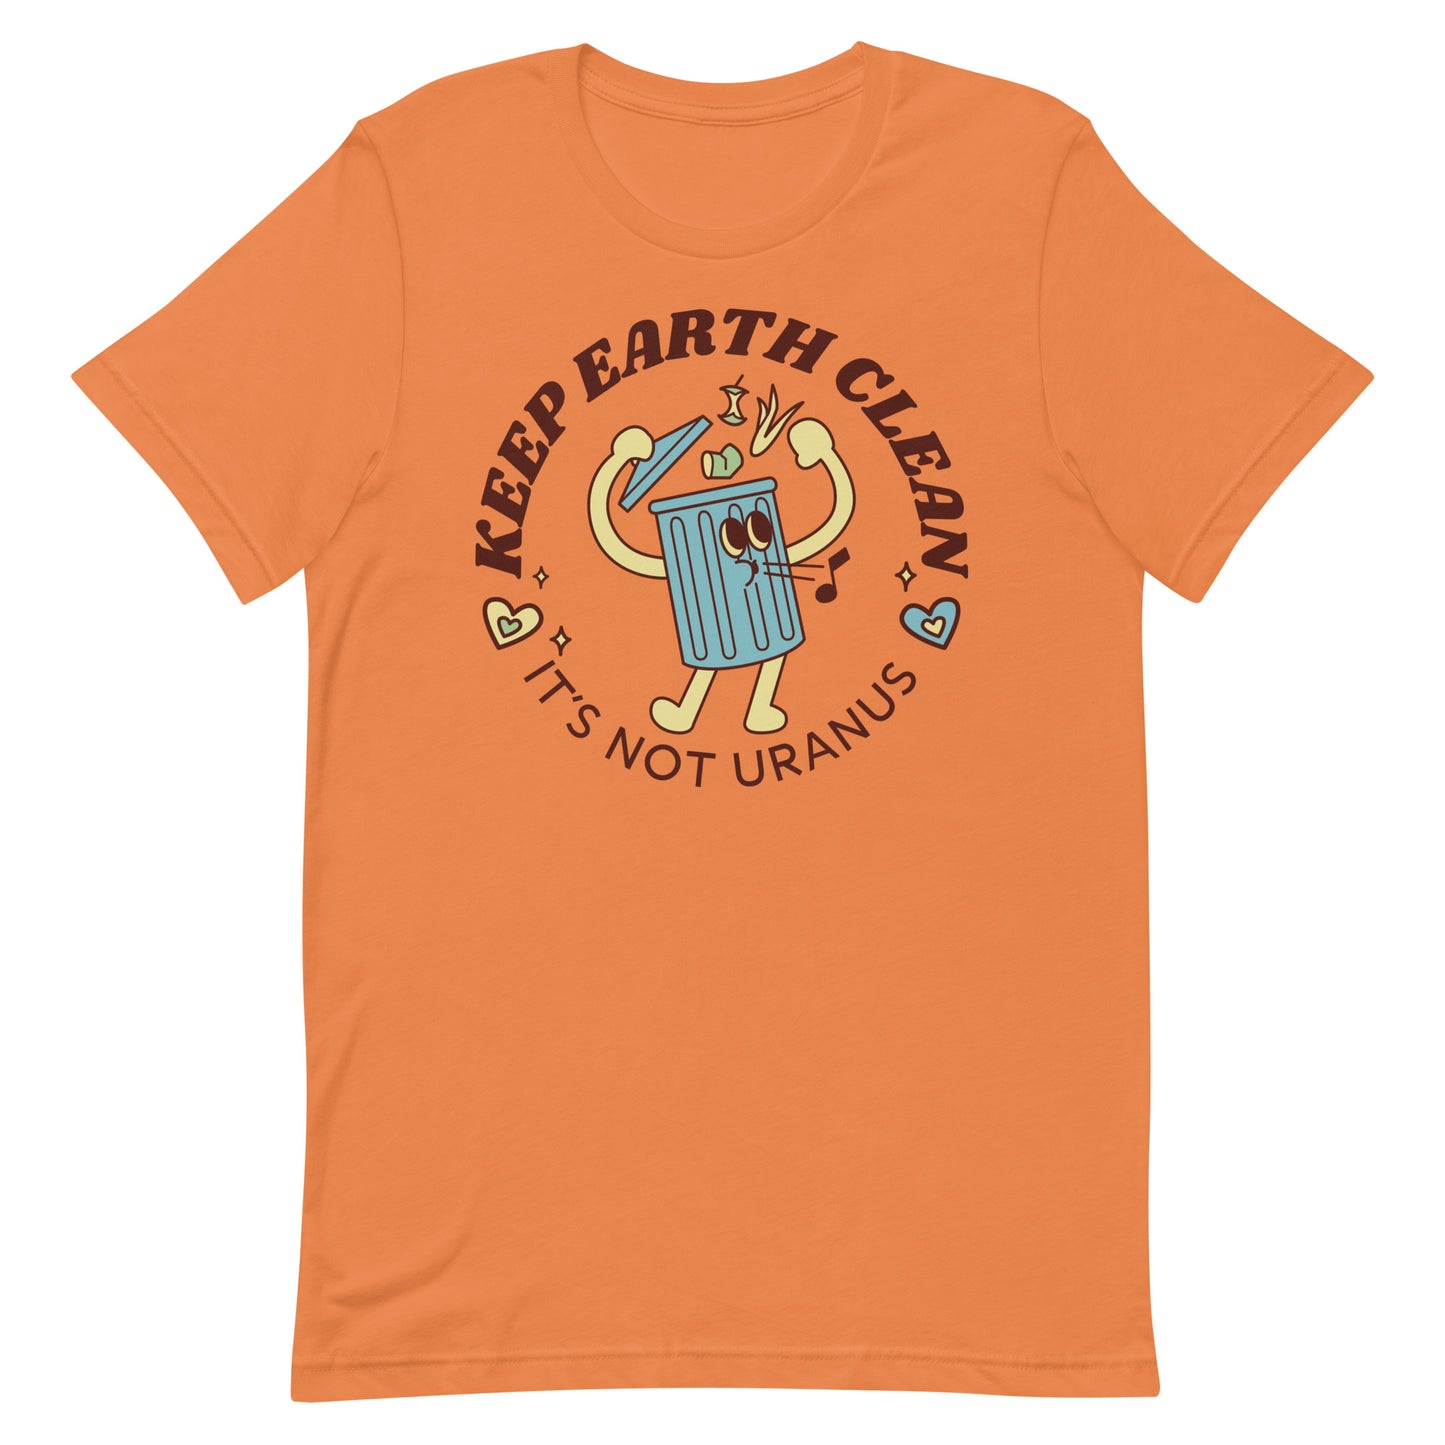 Keep Earth Clean It's Not Uranus Unisex t-shirt